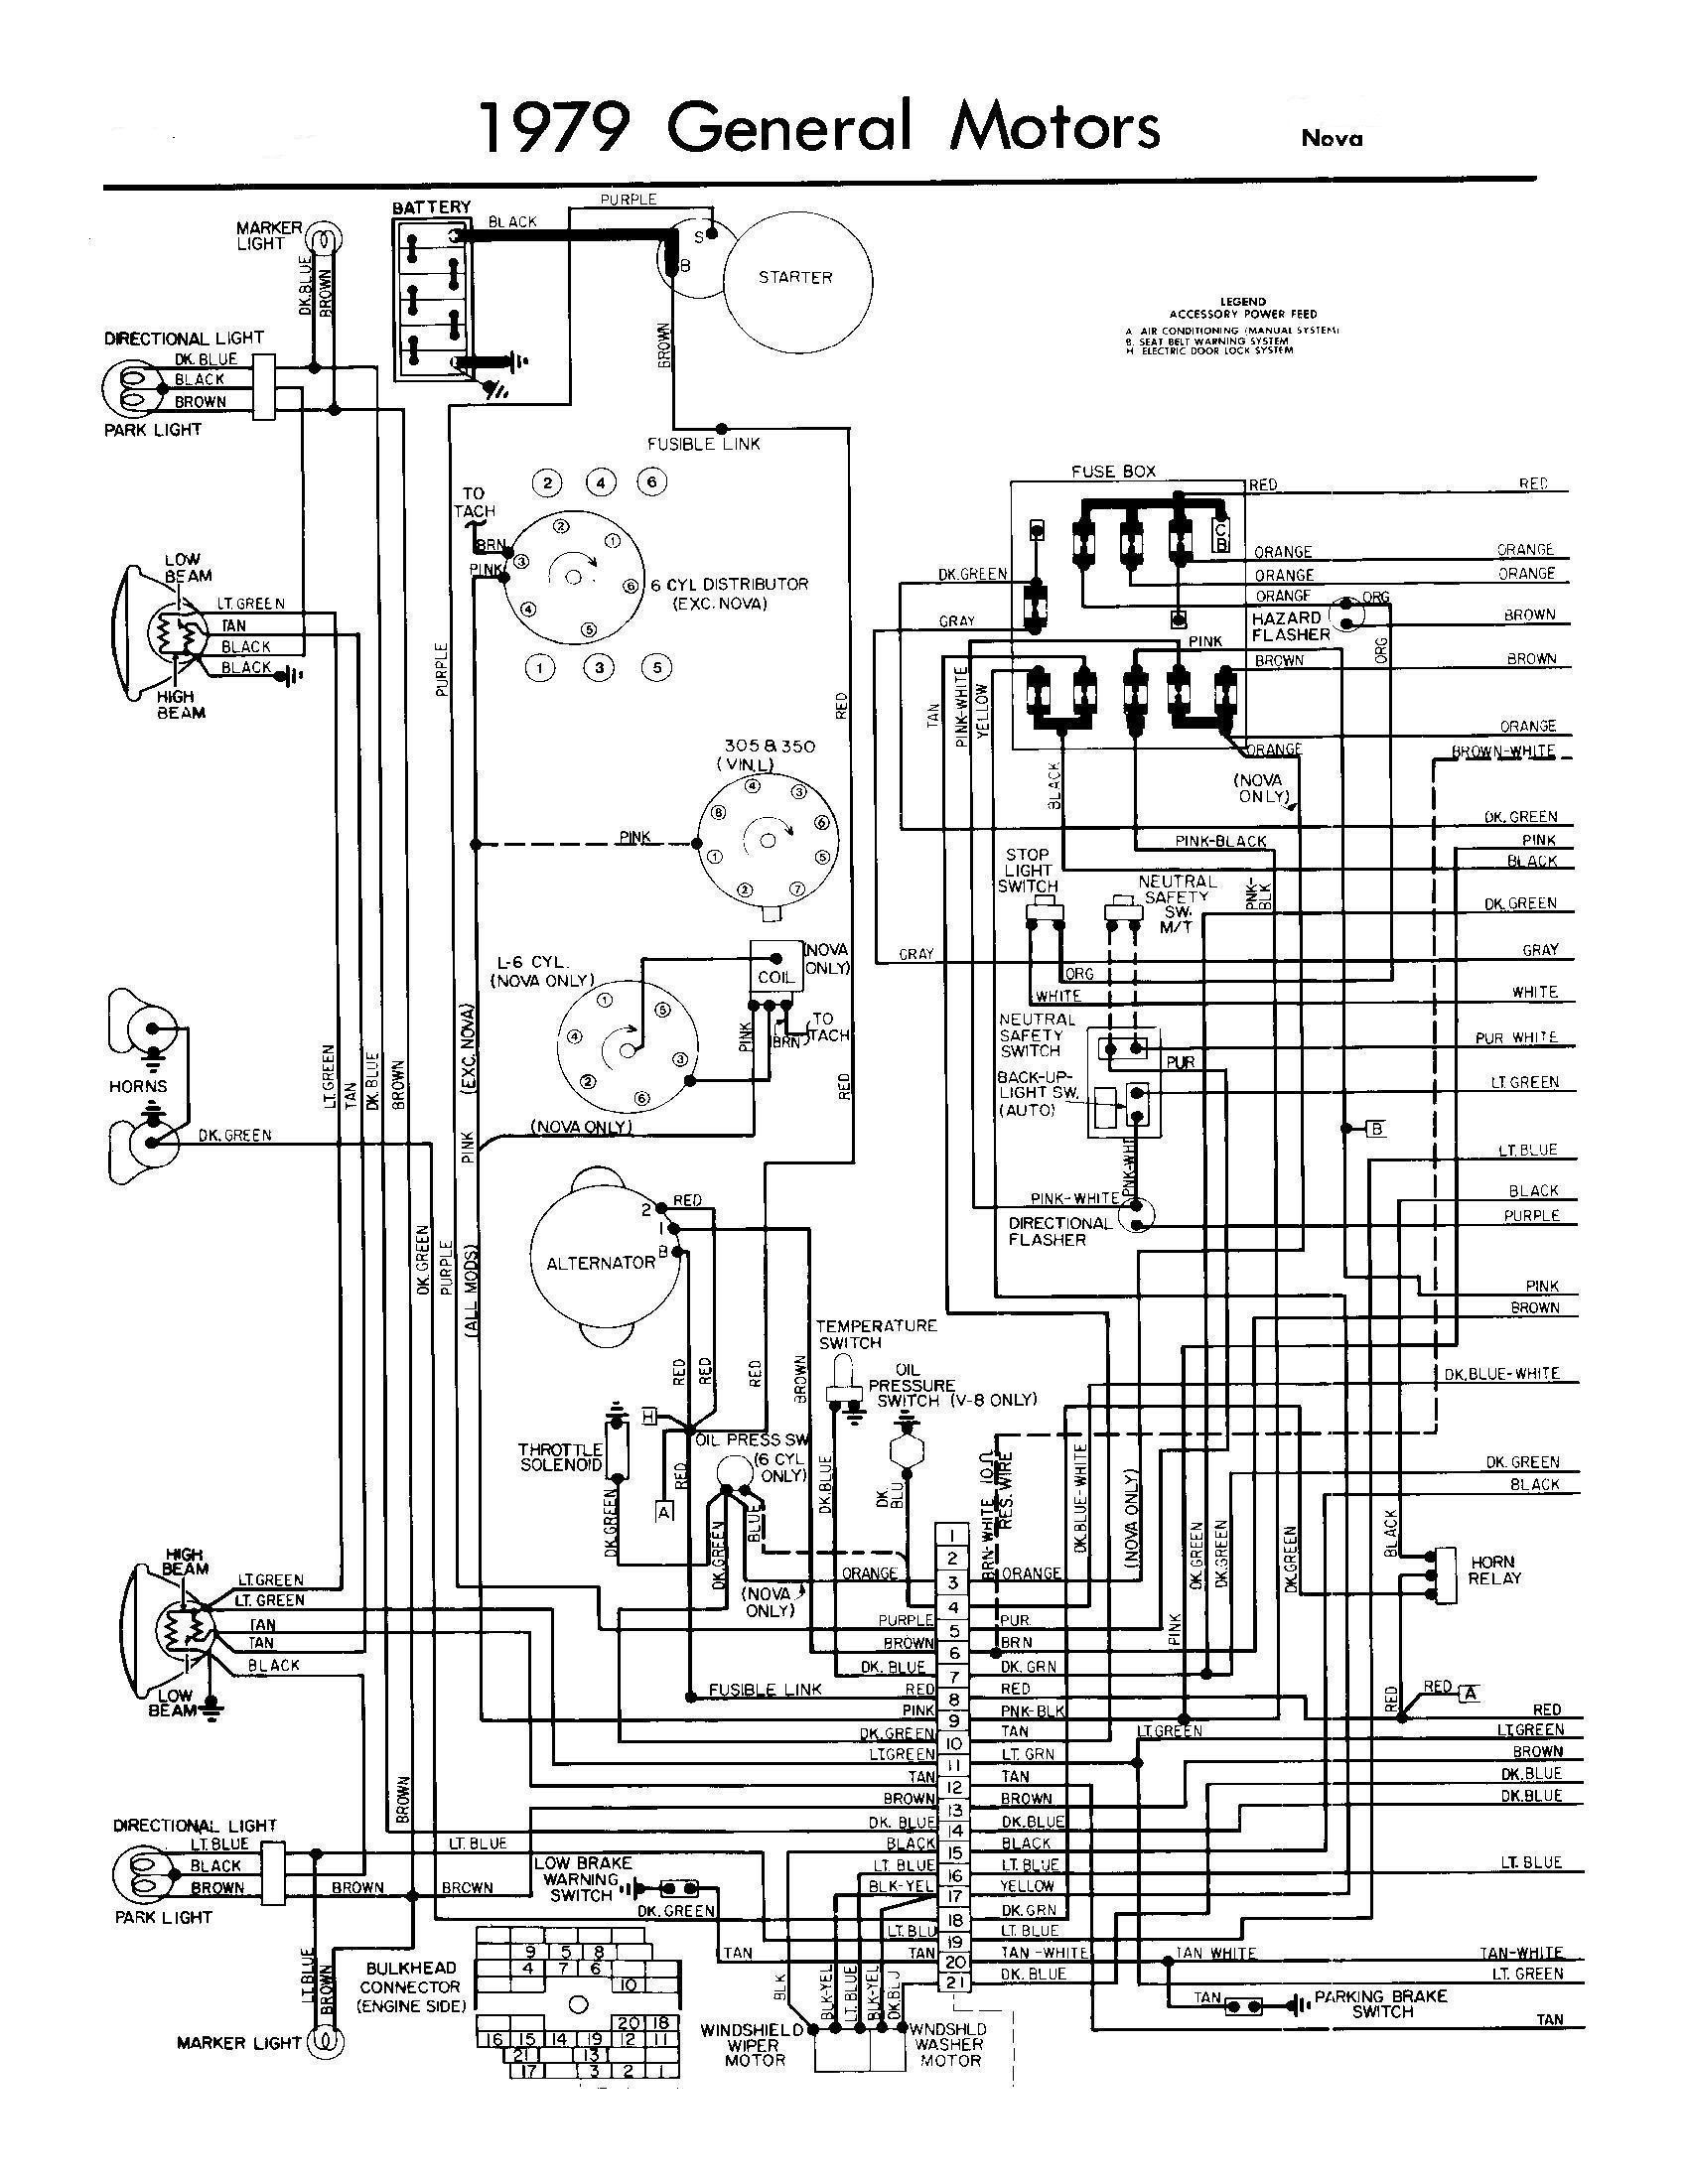 john deere alternator wiring diagram elegant motorola alternator wiring diagram john deere fresh vw golf mk1 of john deere alternator wiring diagram